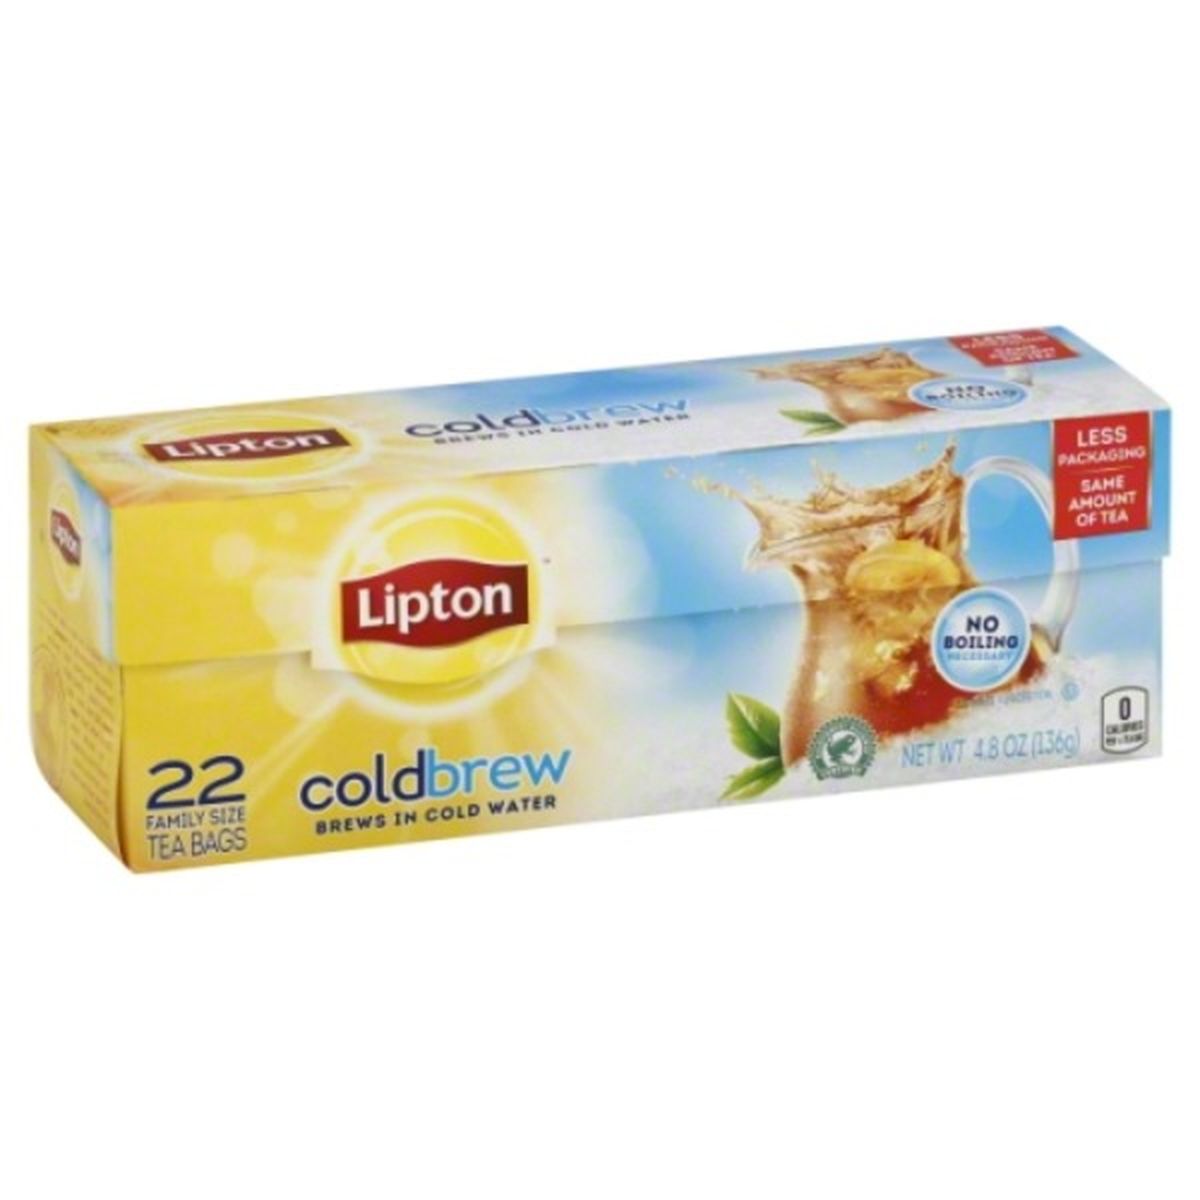 Calories in Lipton ColdBrew Iced Tea, Family Size Tea Bags